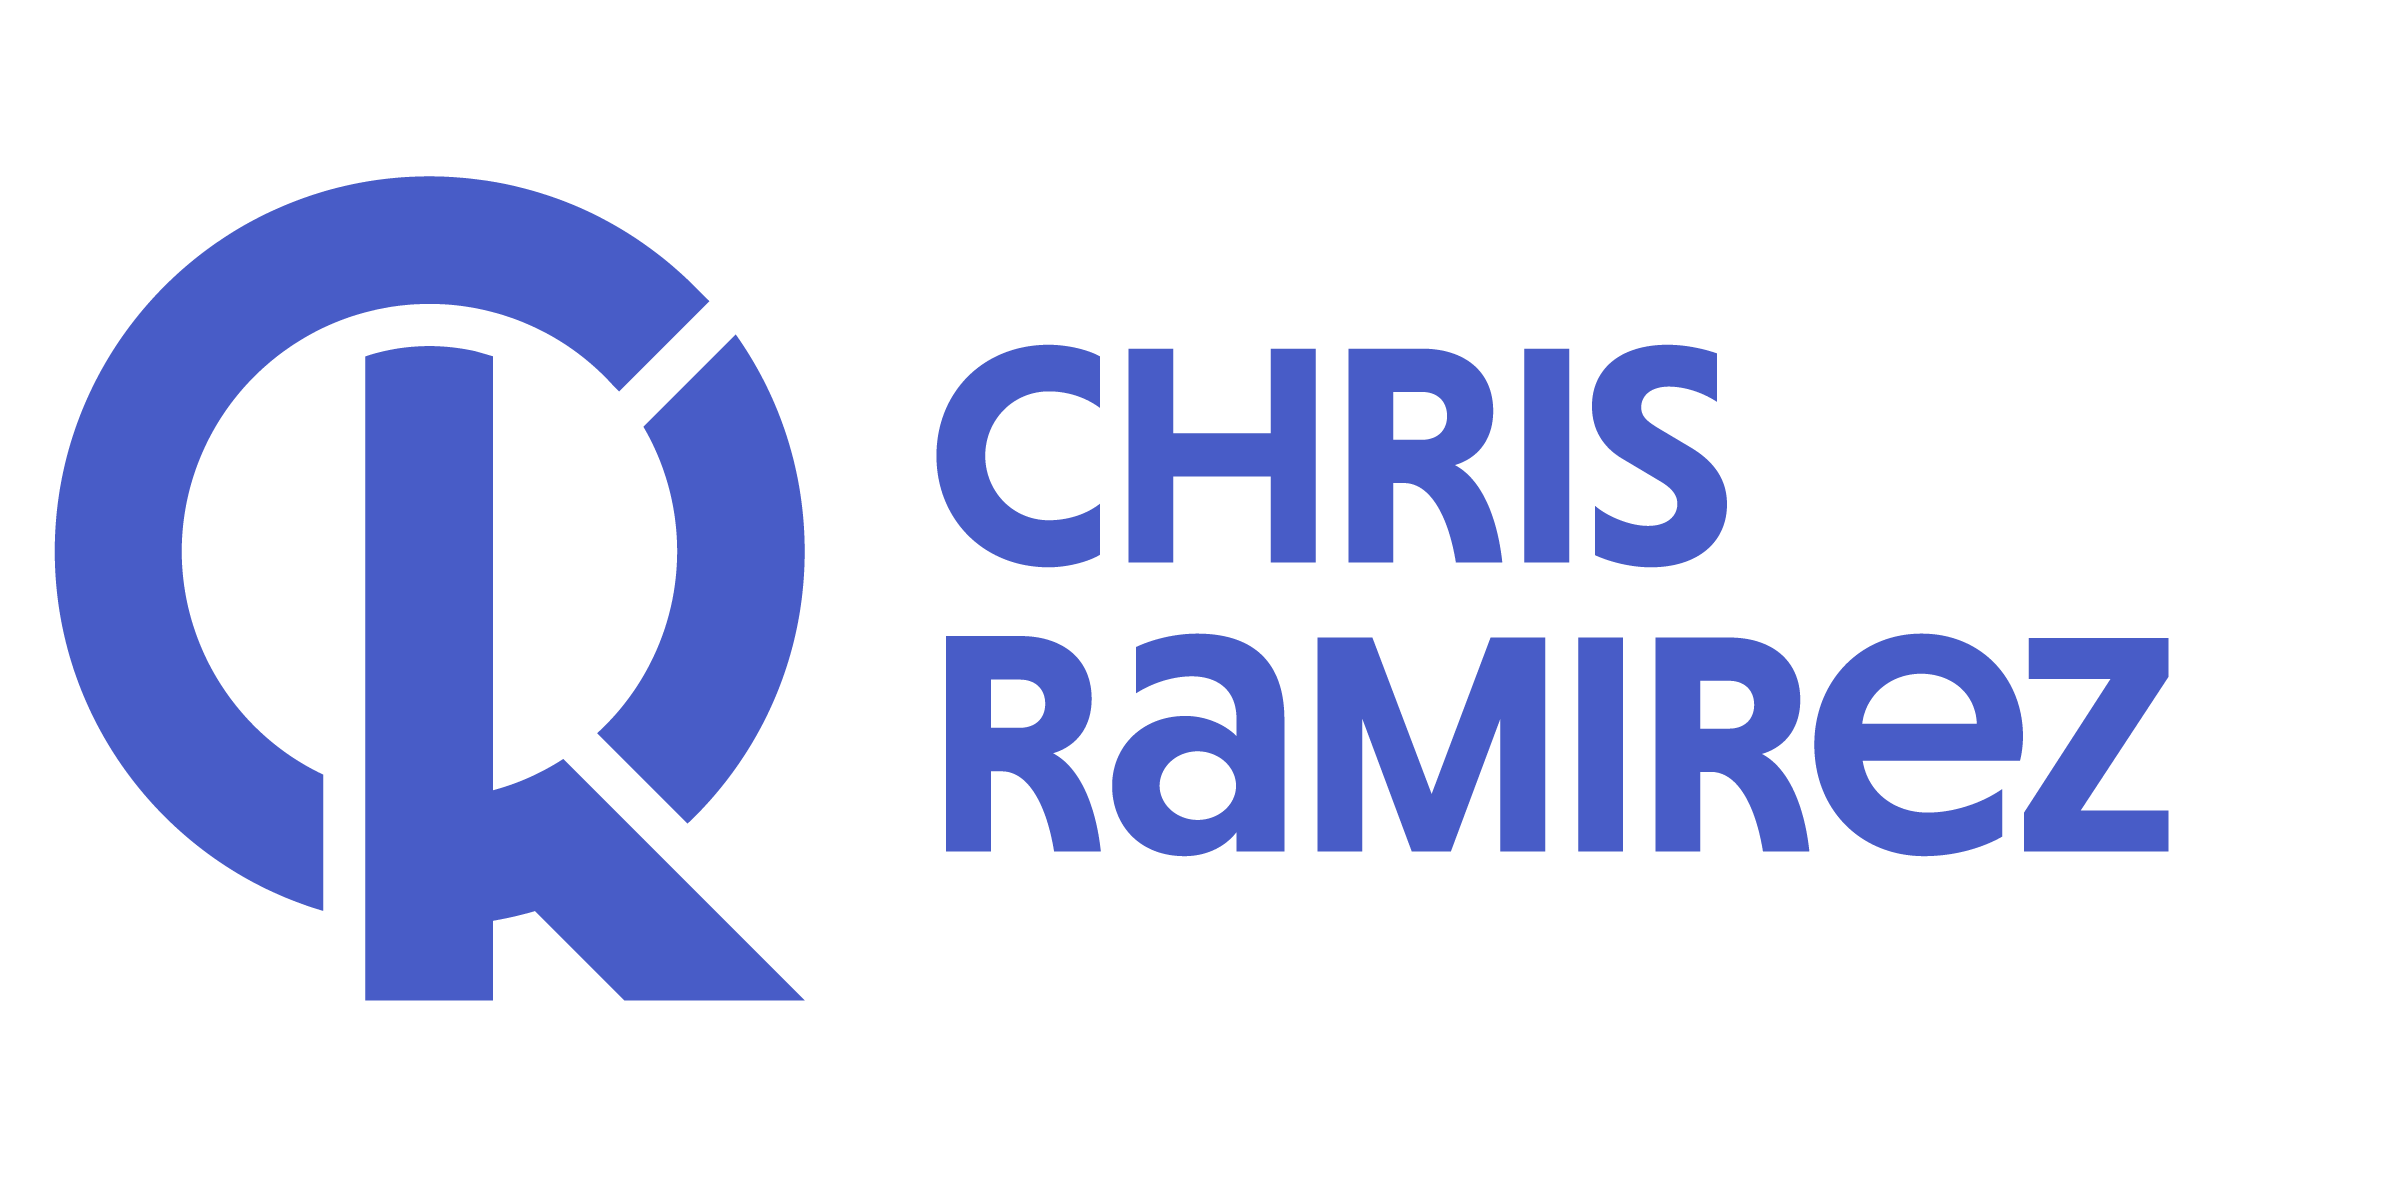 Chris Ramirez